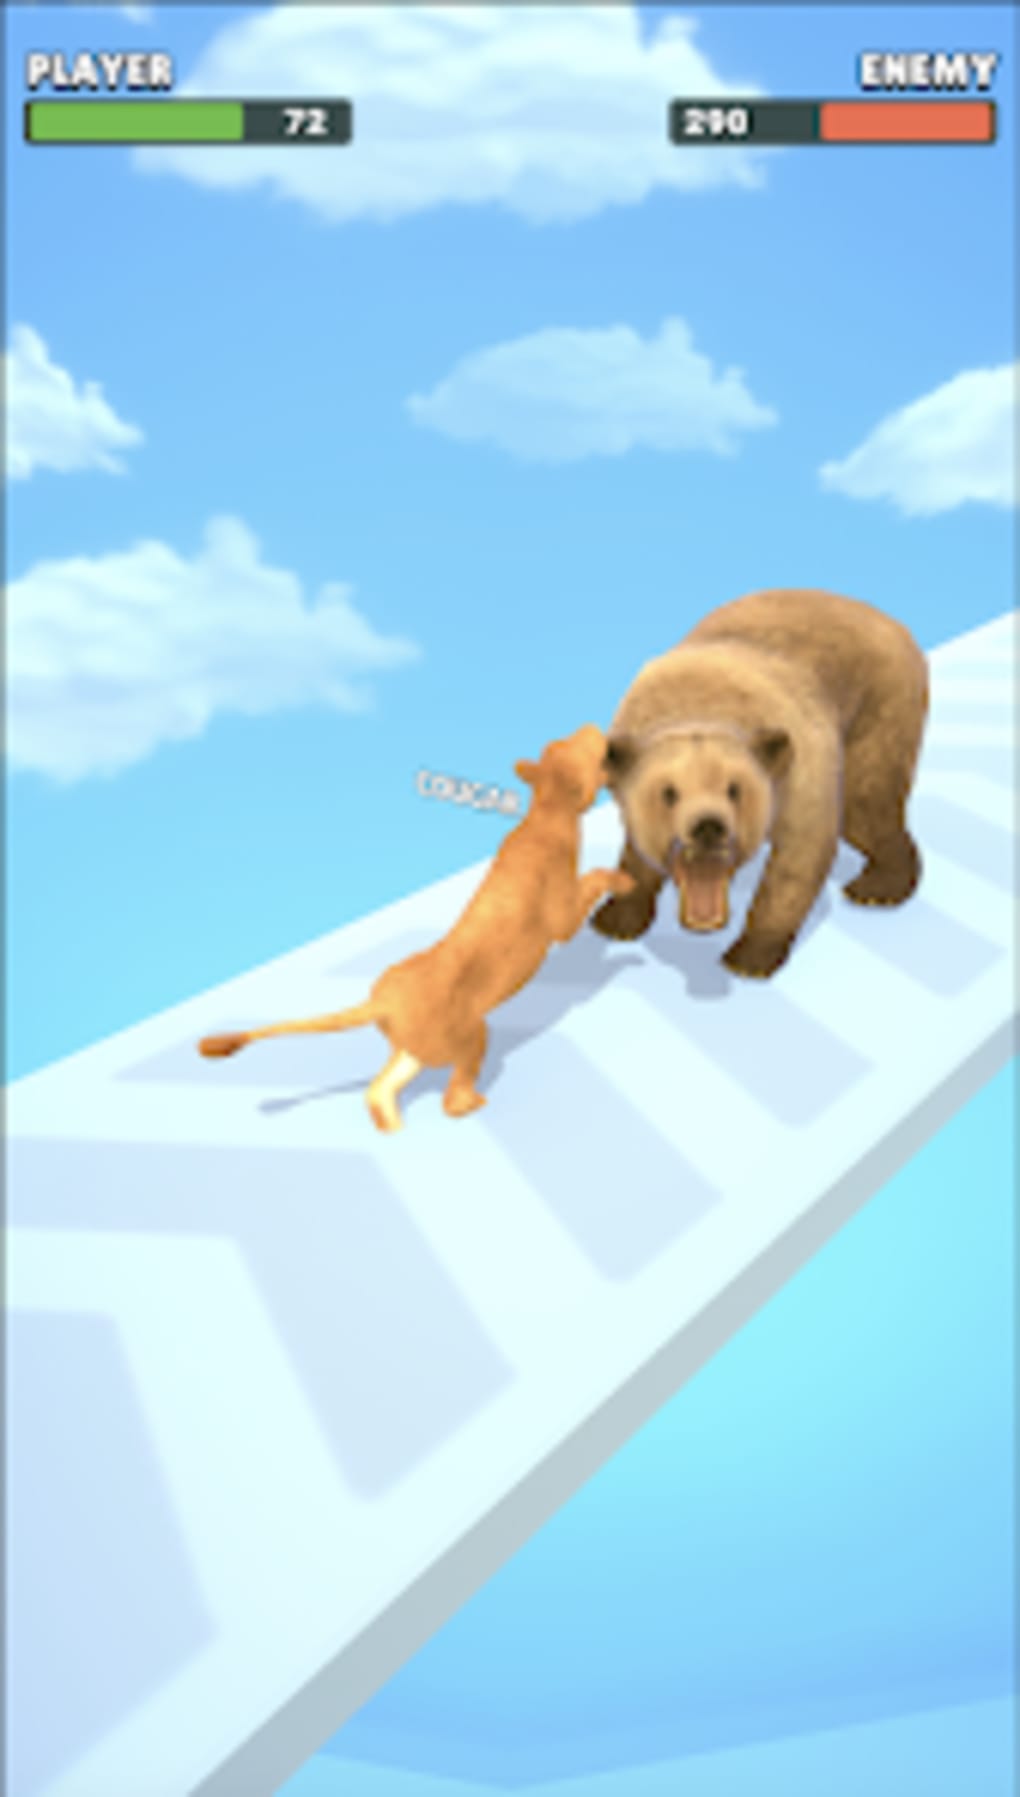 Cat Game Review: “Cat Evolution” App